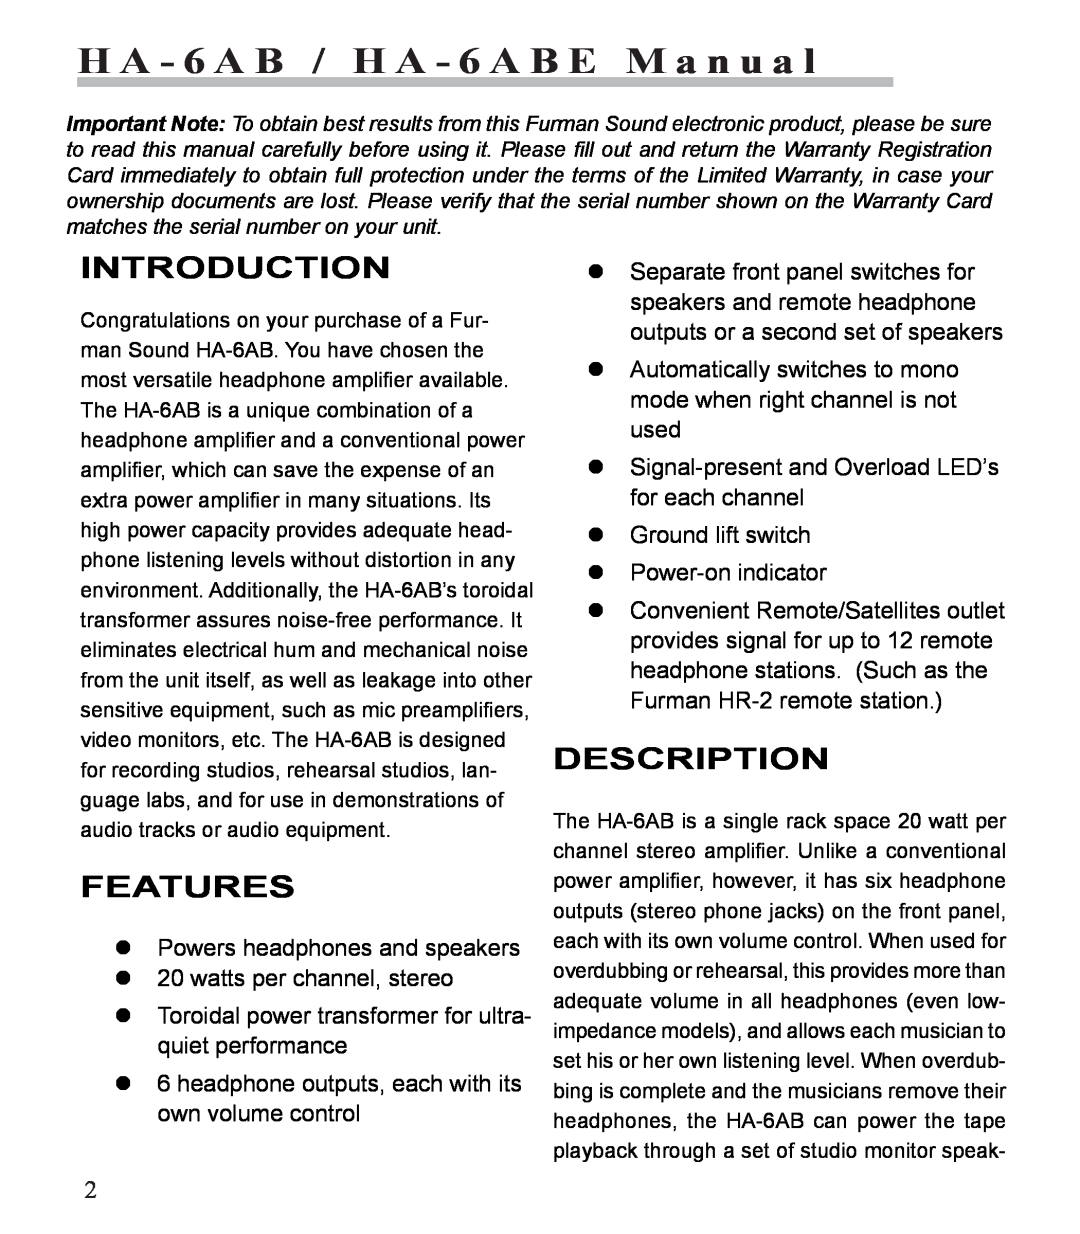 Furman Sound HA-6AB manual Introduction, Features, Description, H A - 6 A B / H A - 6 A B E M a n u a l 